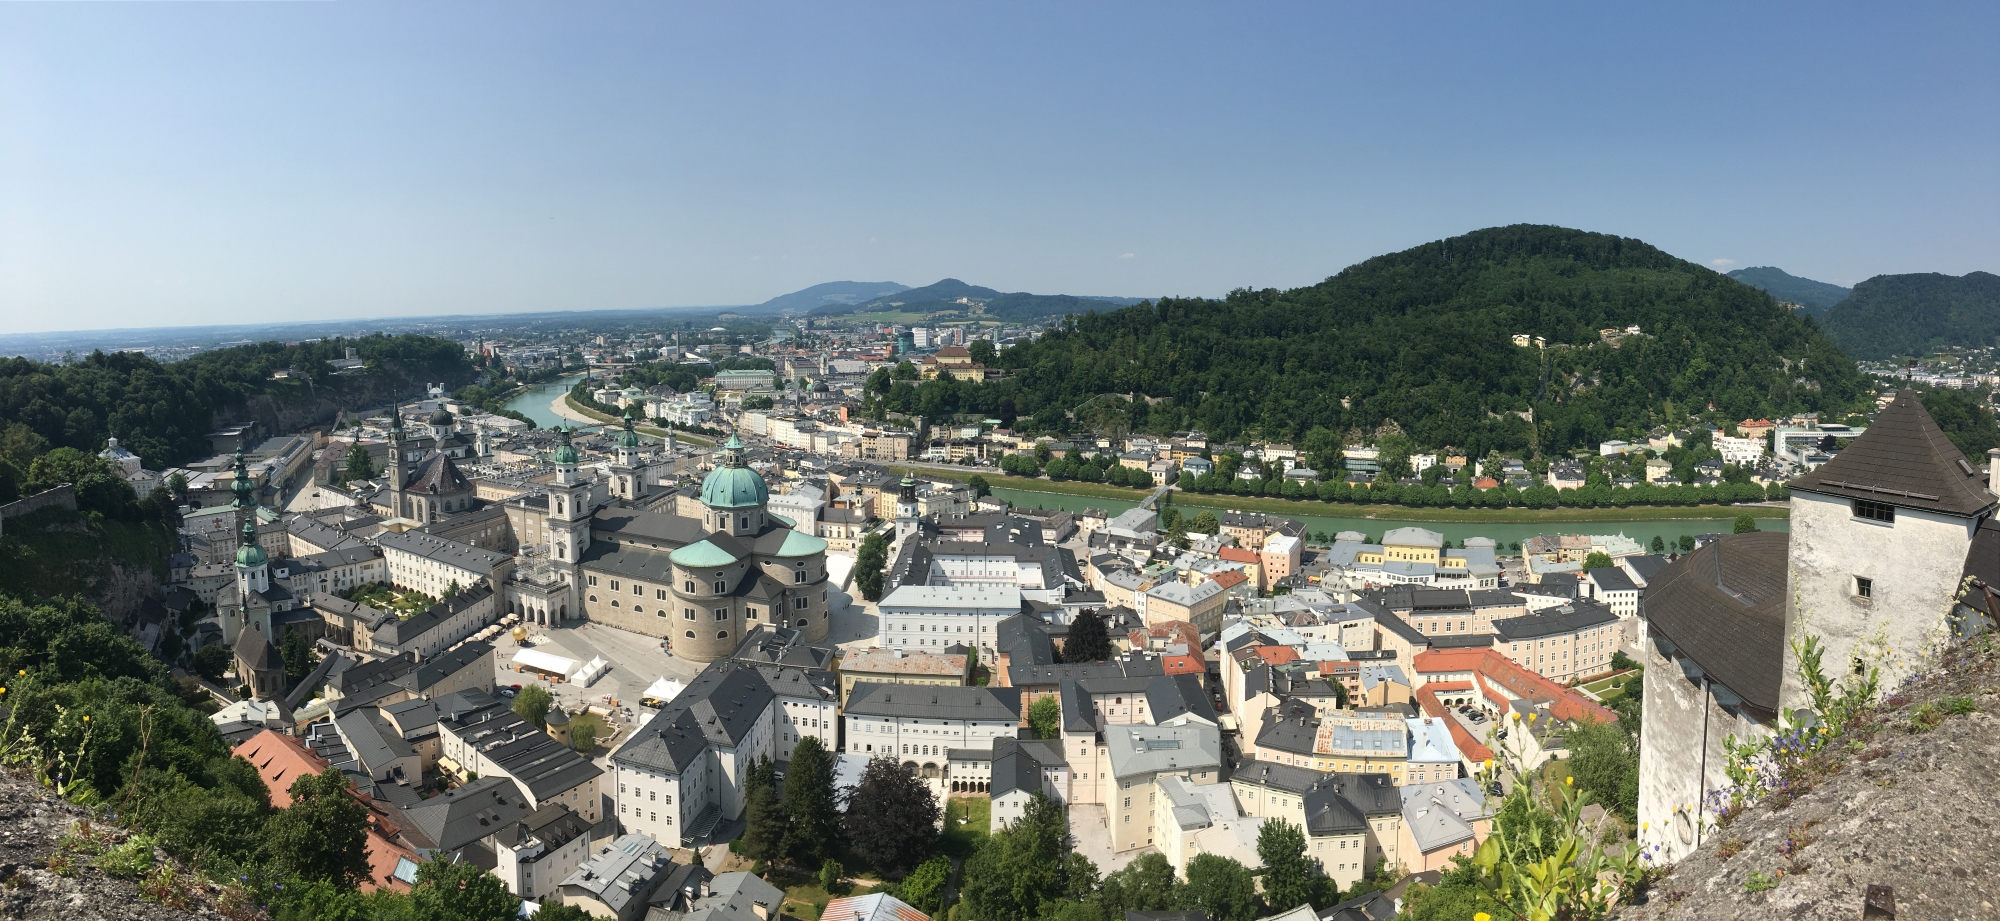 Salzburg from Hohensalzburg Fortress